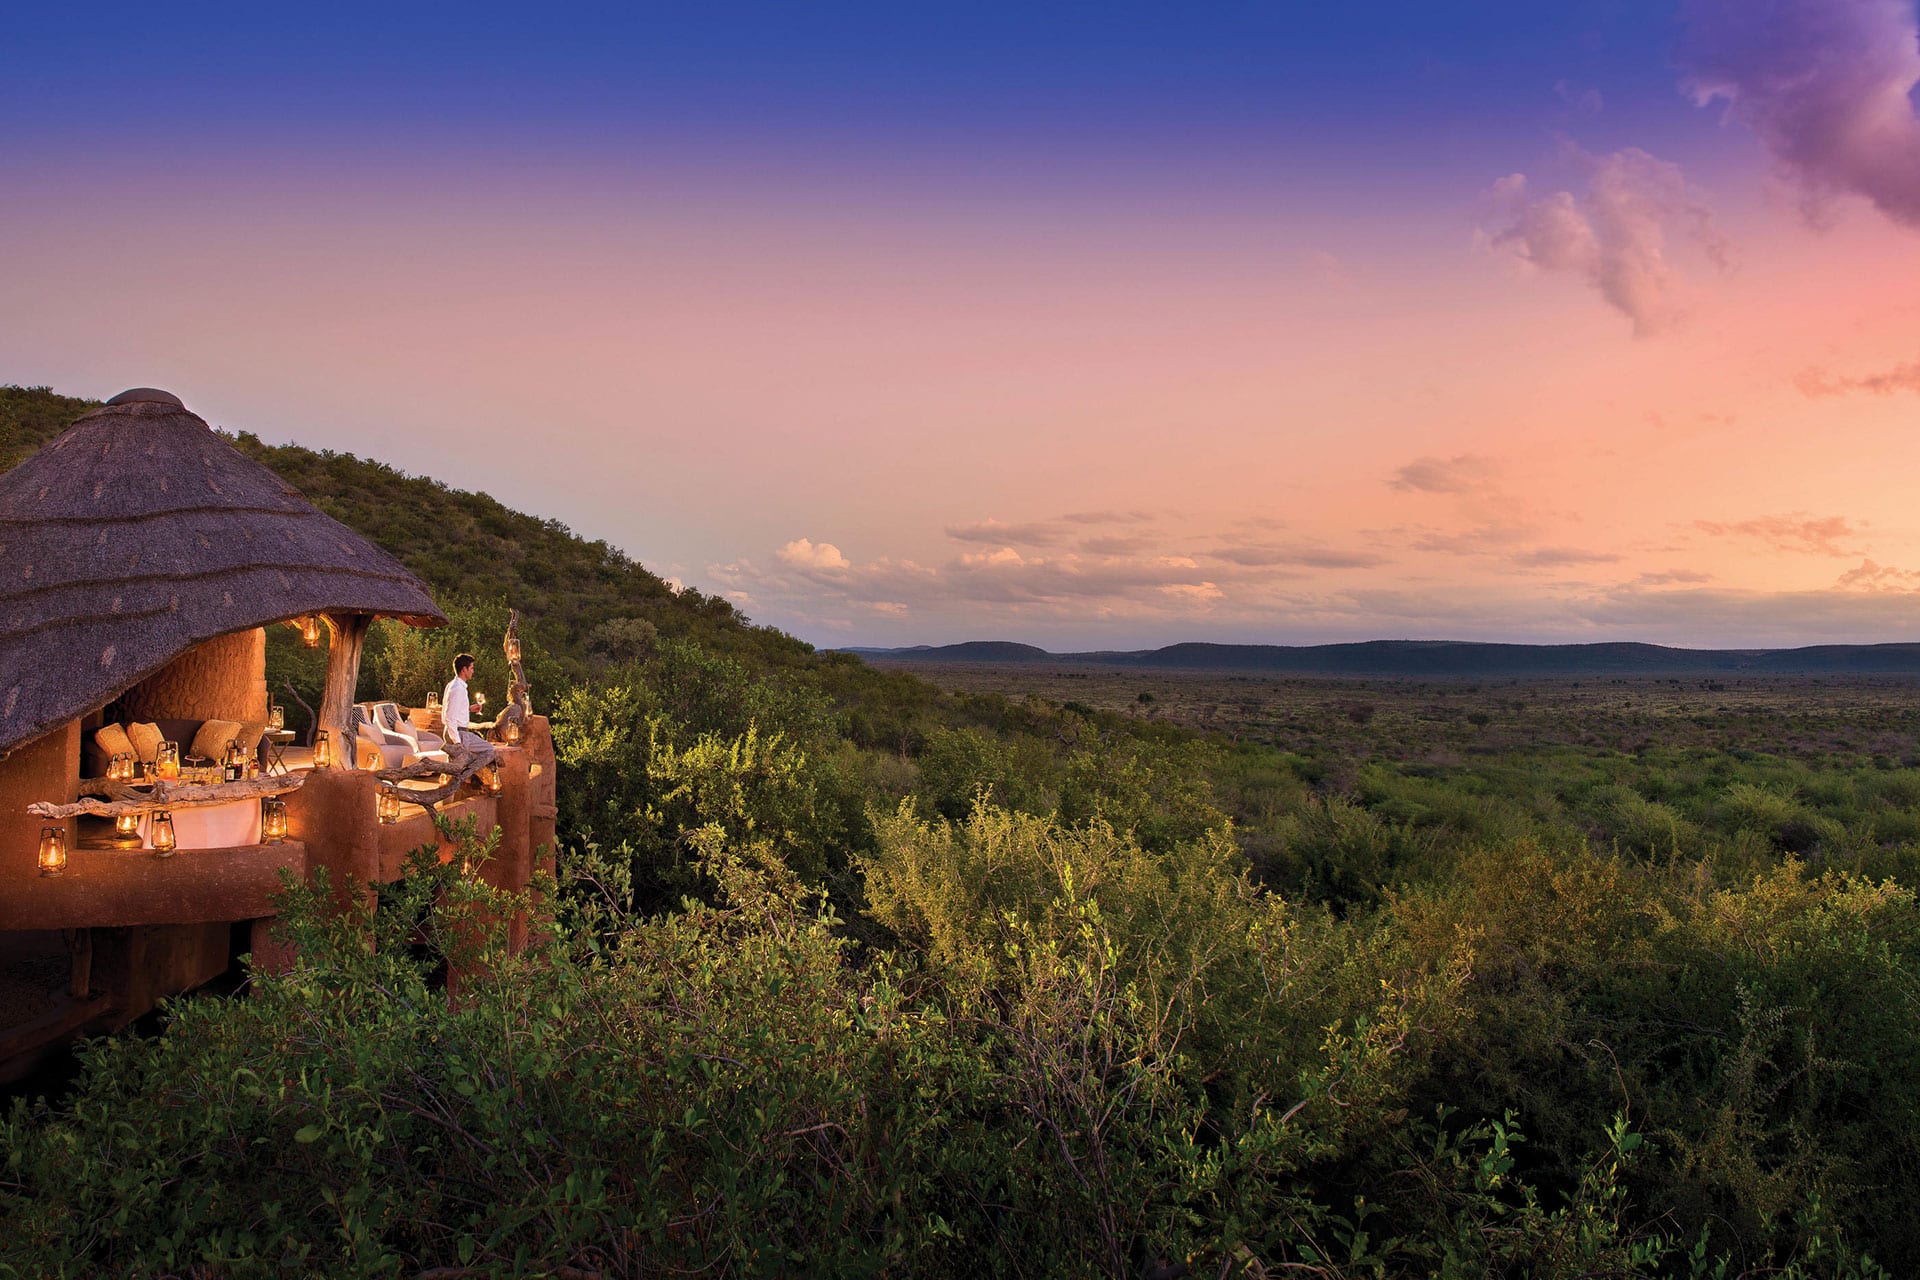 Madikwe Safari Lodge situated in Madikwe Game Reserve which provides malaria-free safari in south africa